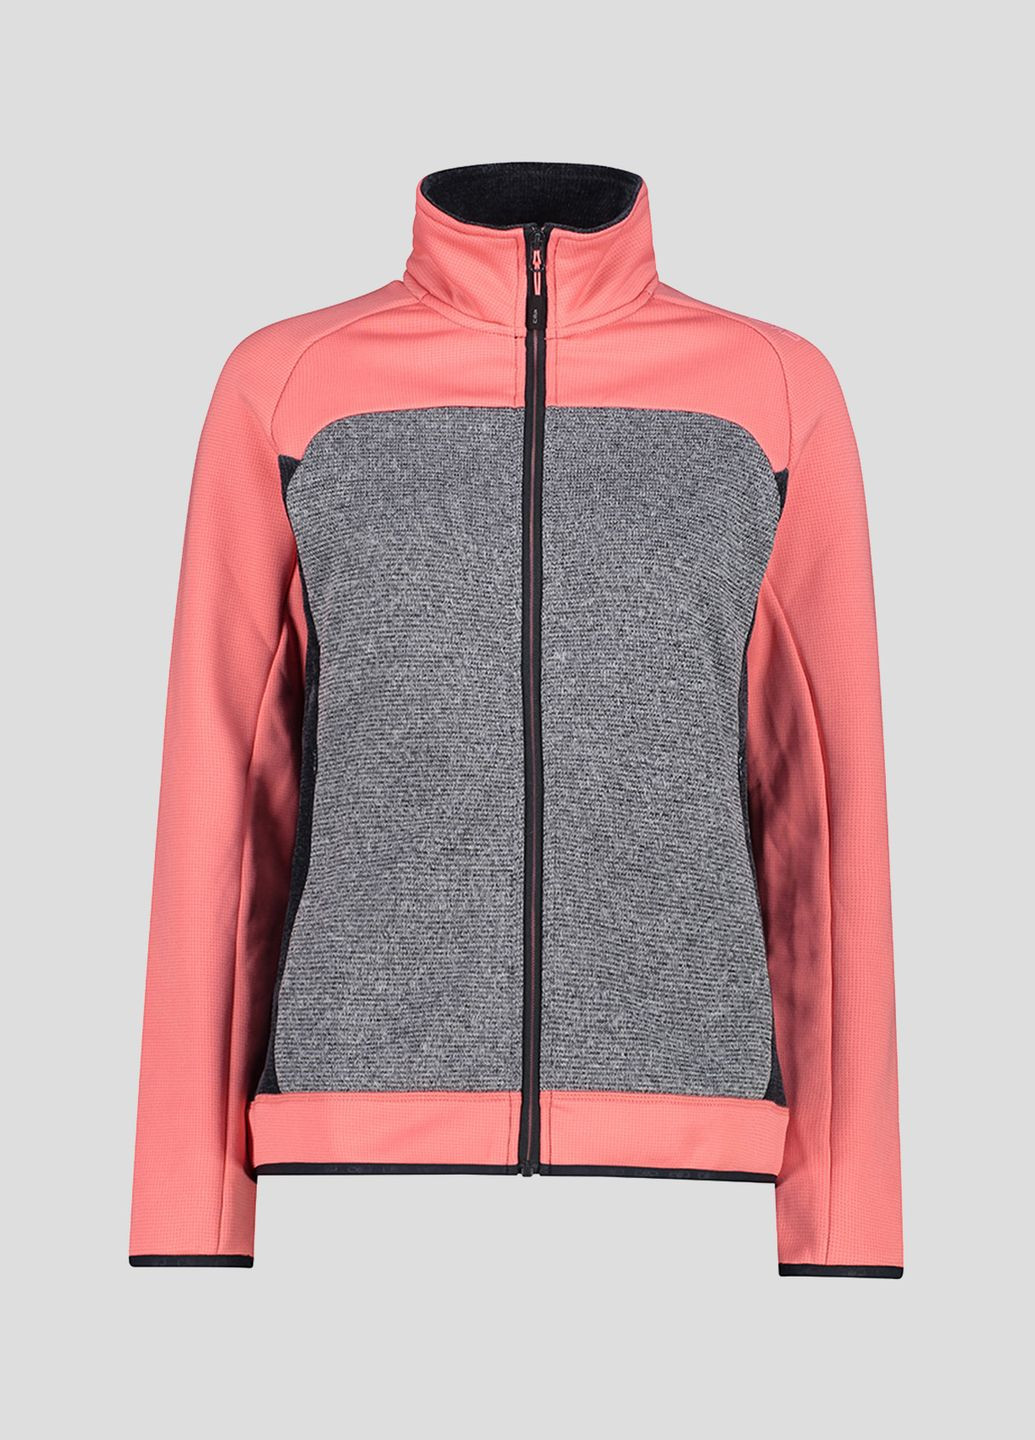 Розово-серая спортивная кофта Woman Jacket CMP (264307361)